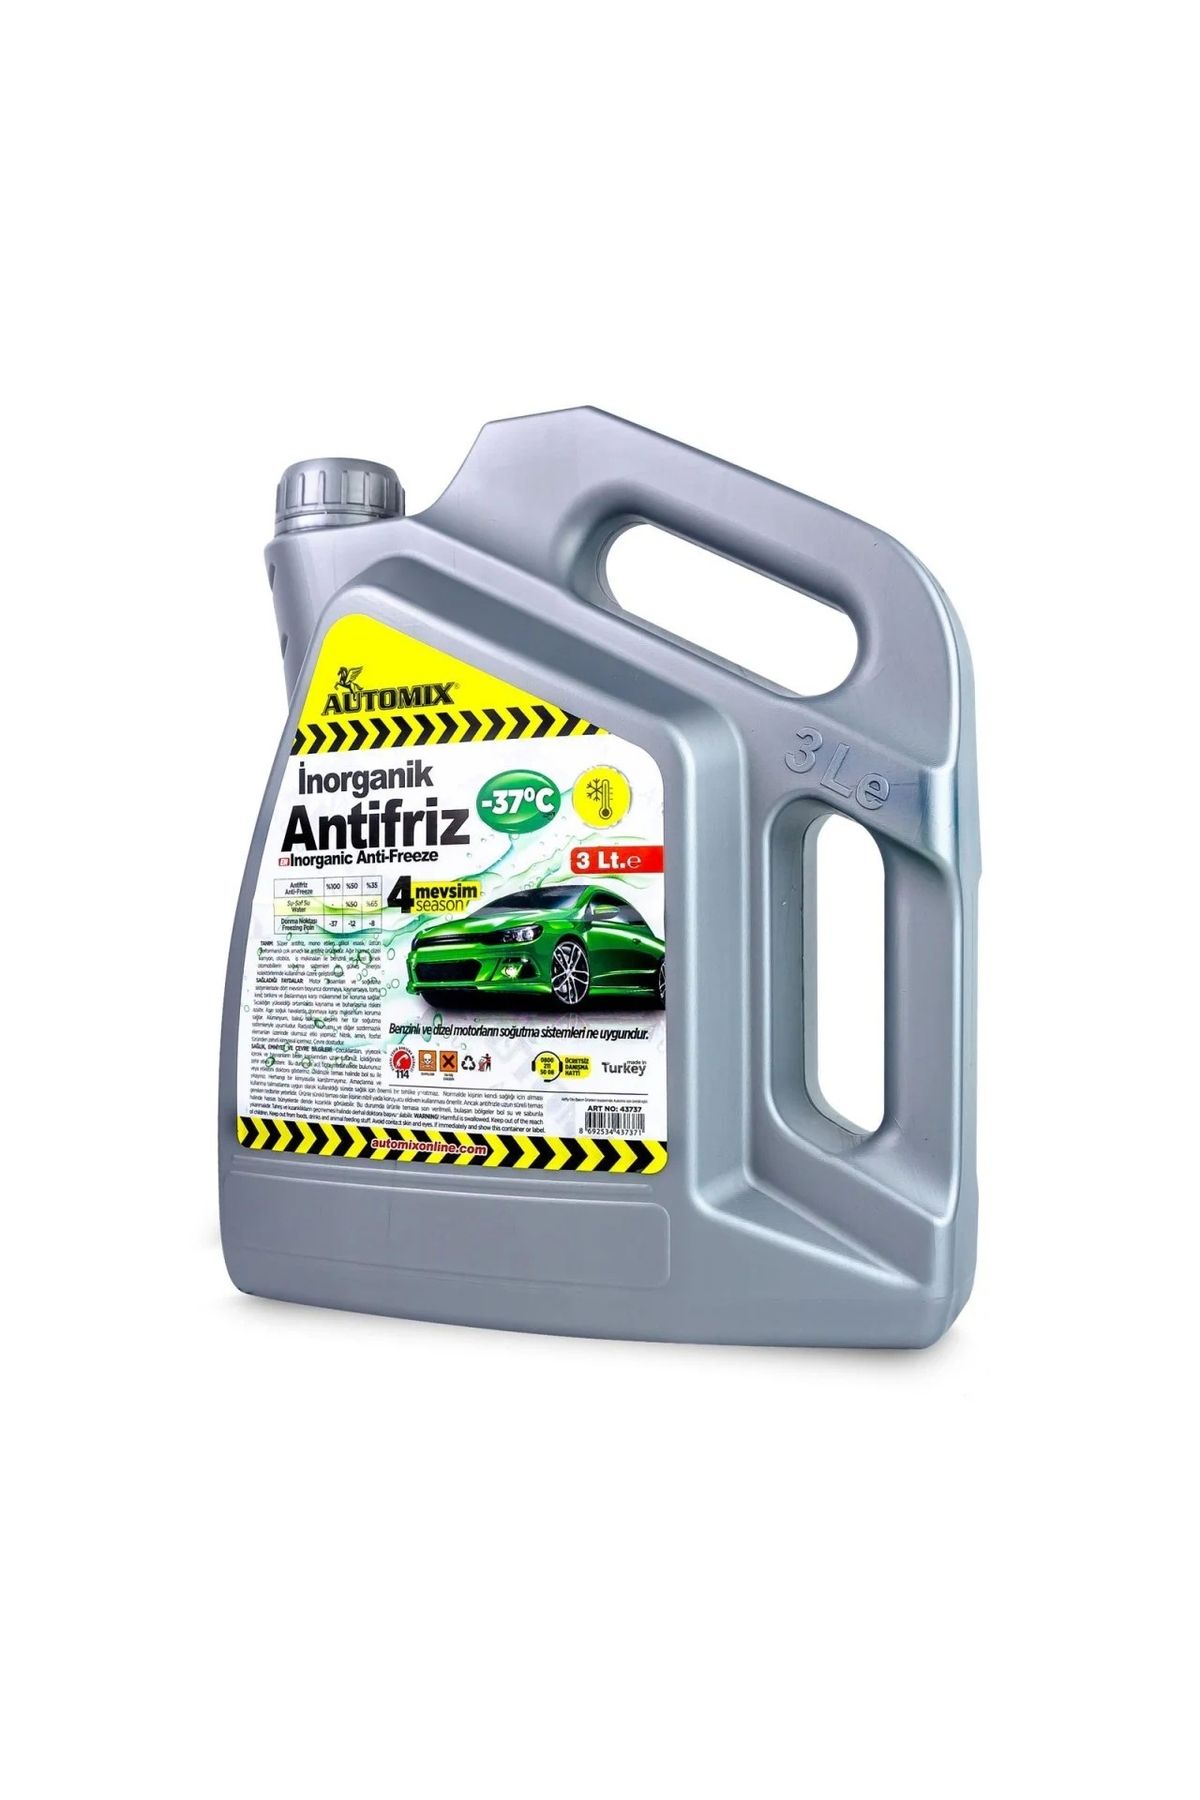 Automix Yeşil Antifriz -37 Inorganik 3lt